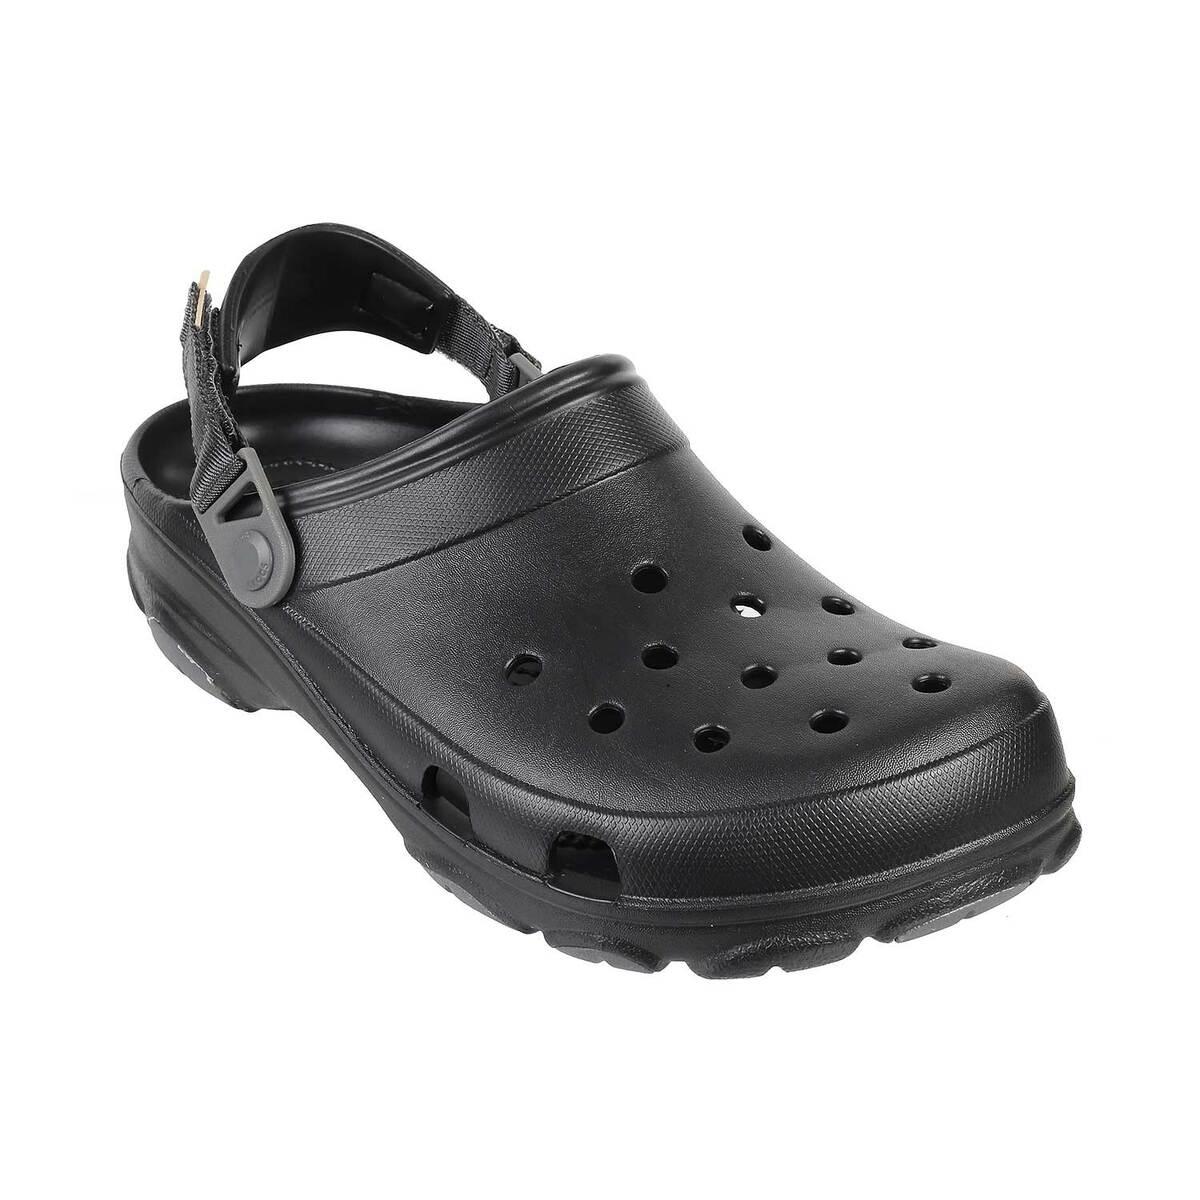 cap rule hawk Buy Crocs Black Casual Clogs Online | SKU: 118-206340-11-10 - Metro Shoes